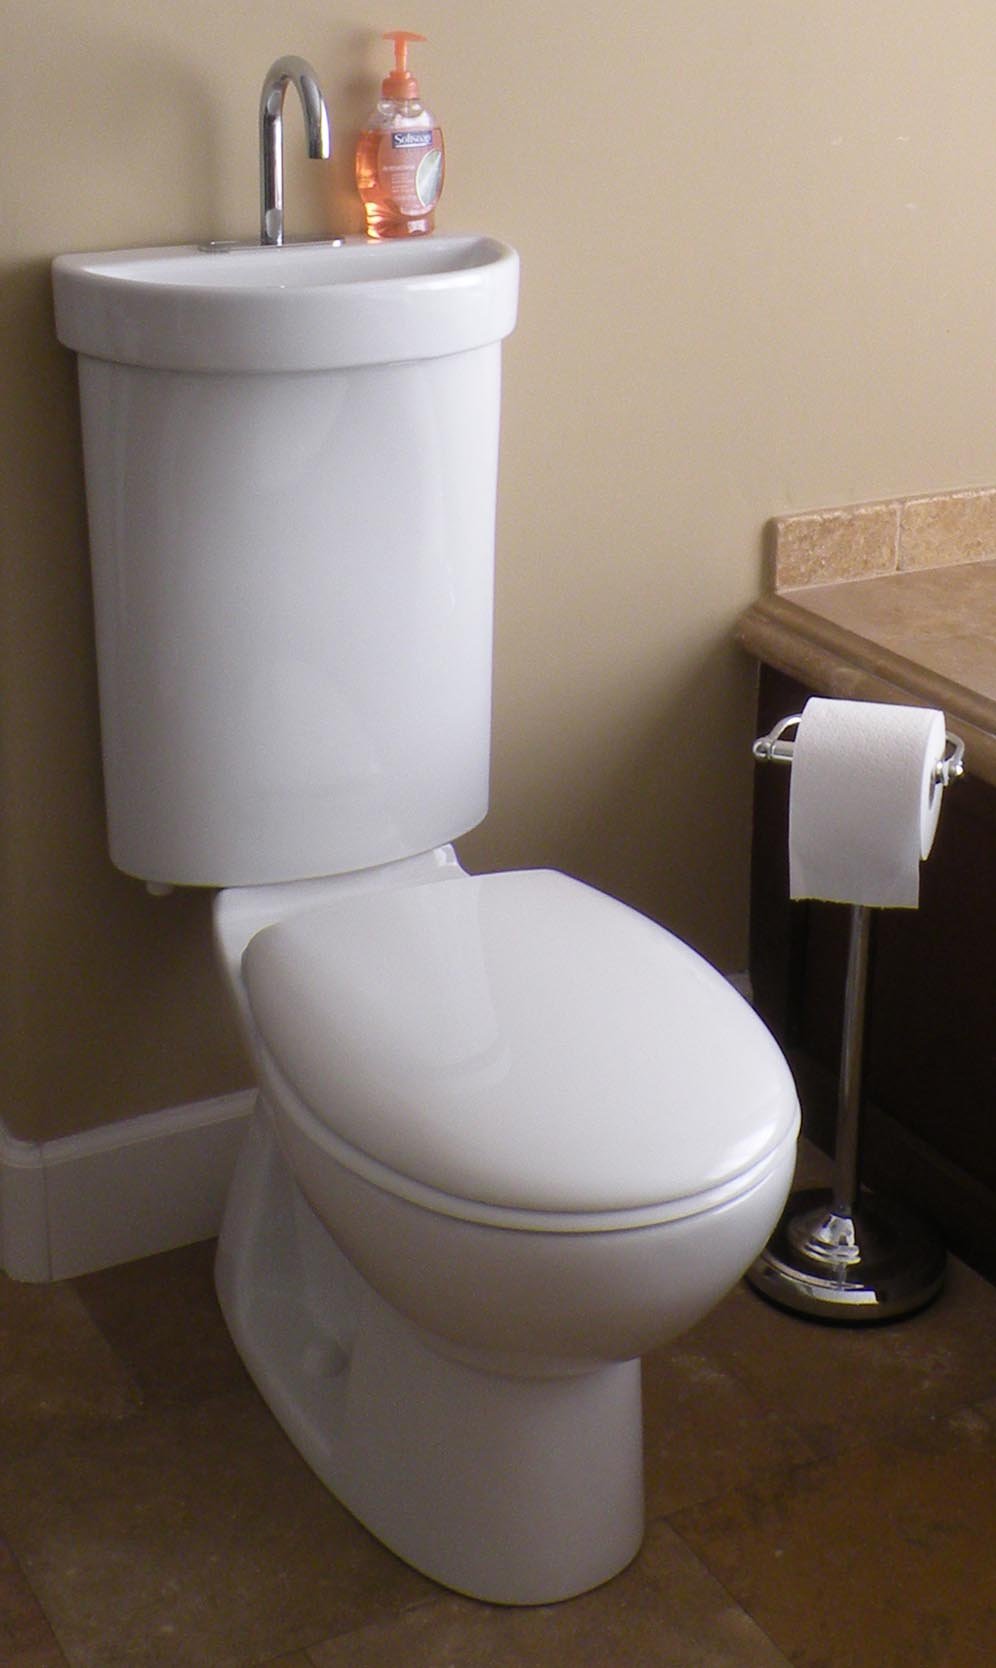 Profile Smart high efficiency dual flush toilet